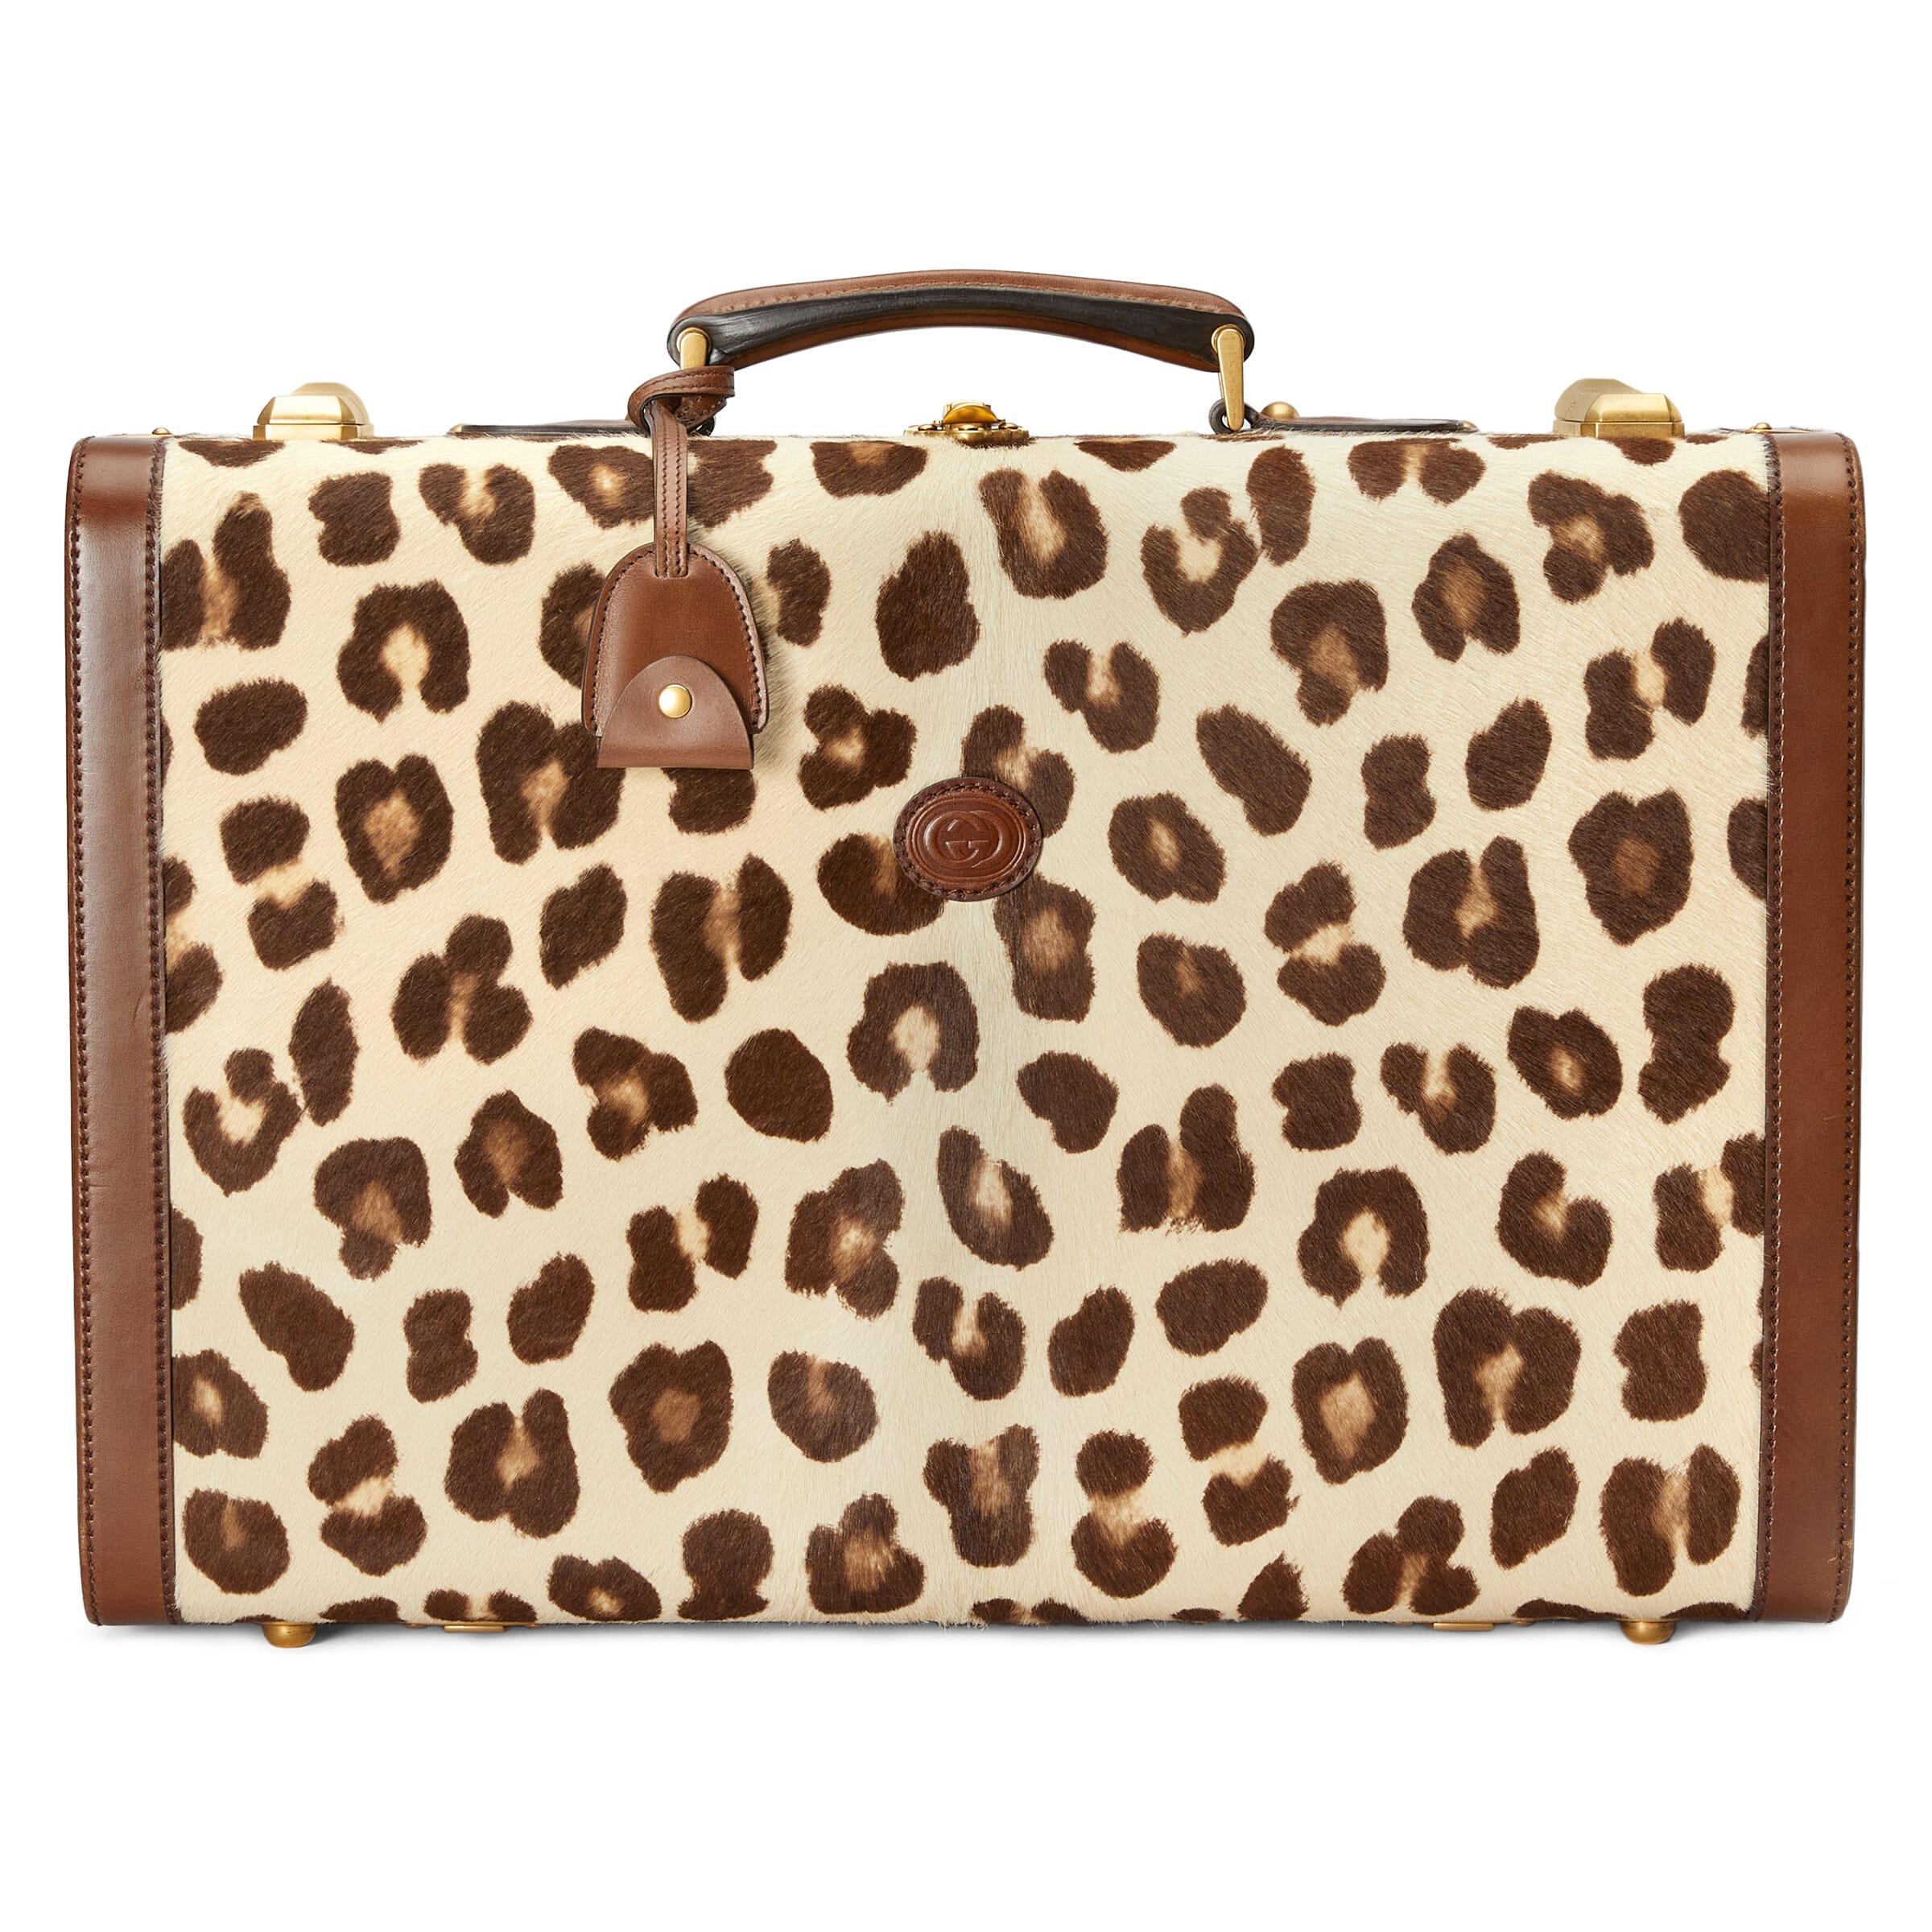 Gucci Ha Ha Ha Rigid Suitcase, Neutral, Leather in Metallic | Lyst